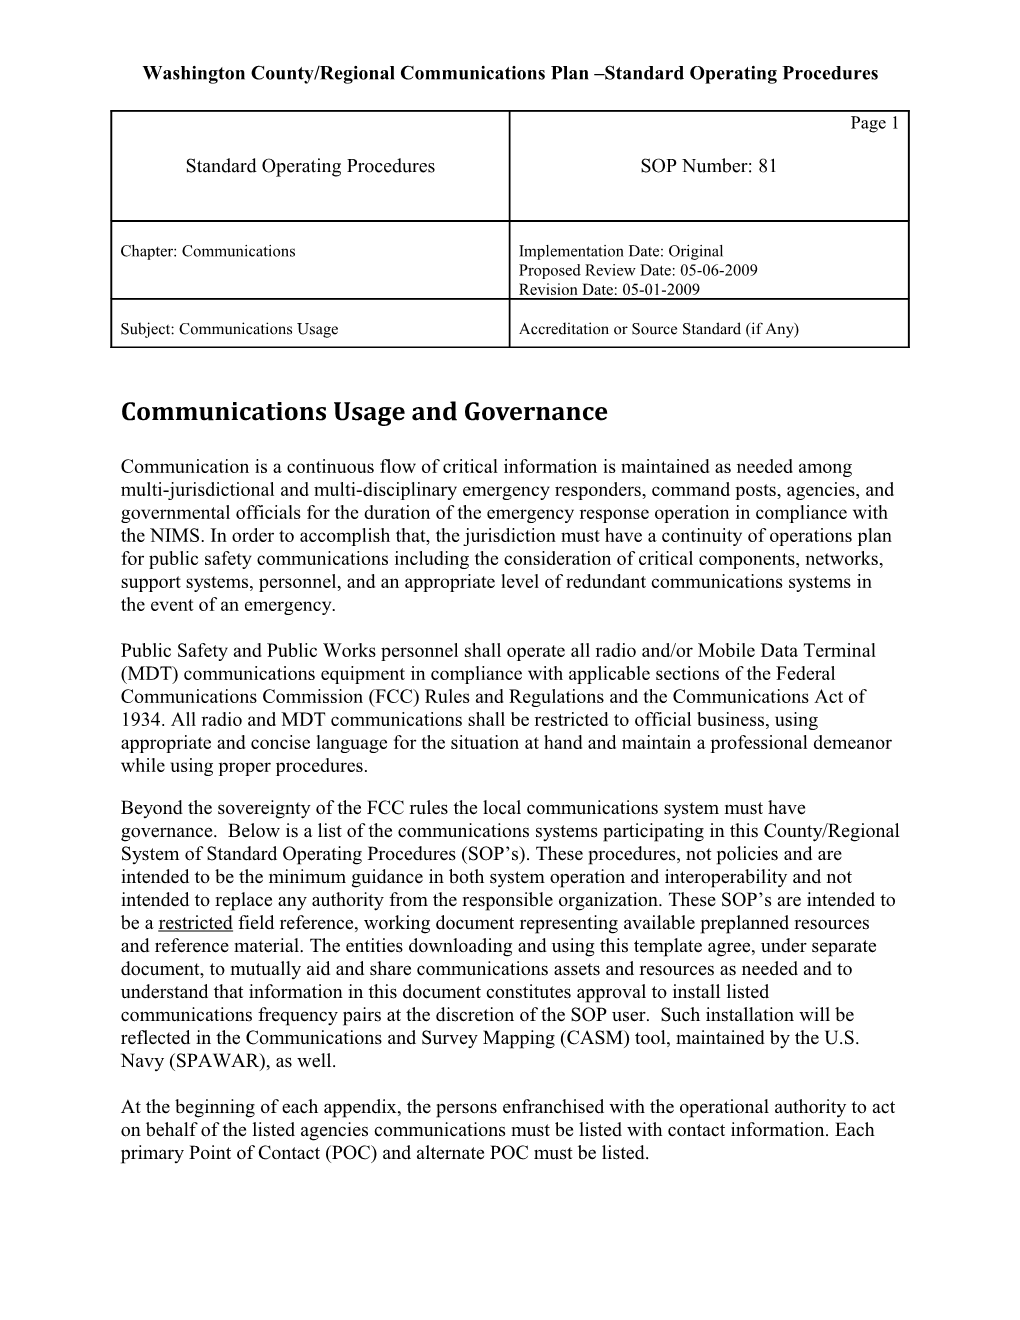 Washington County/Regional Communications Plan Standard Operating Procedures